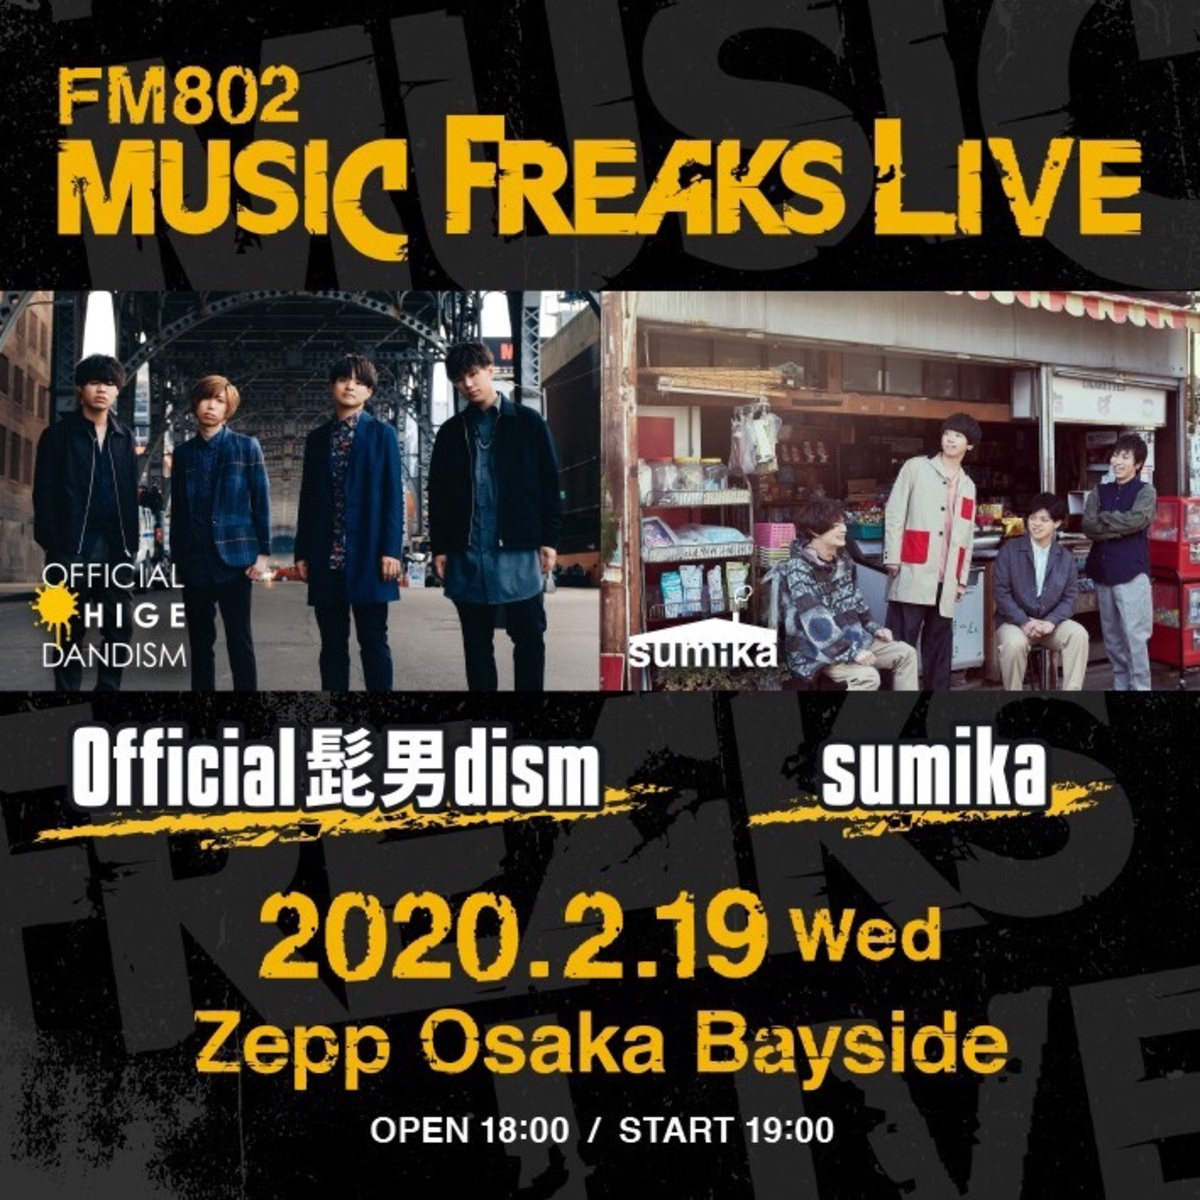 Official髭男dism Sumika出演 来年2 19にzepp Osaka Baysideにて Fm802 Music Freaks Live 開催決定